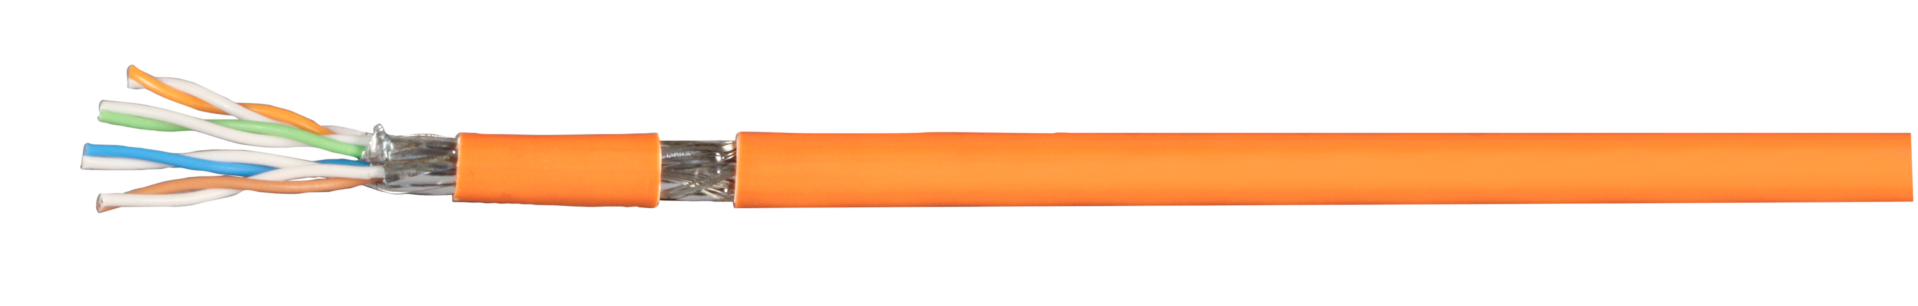 Patch cable Cat.7 PiMF UC900MHz SS26 4P FRNC-B, orange